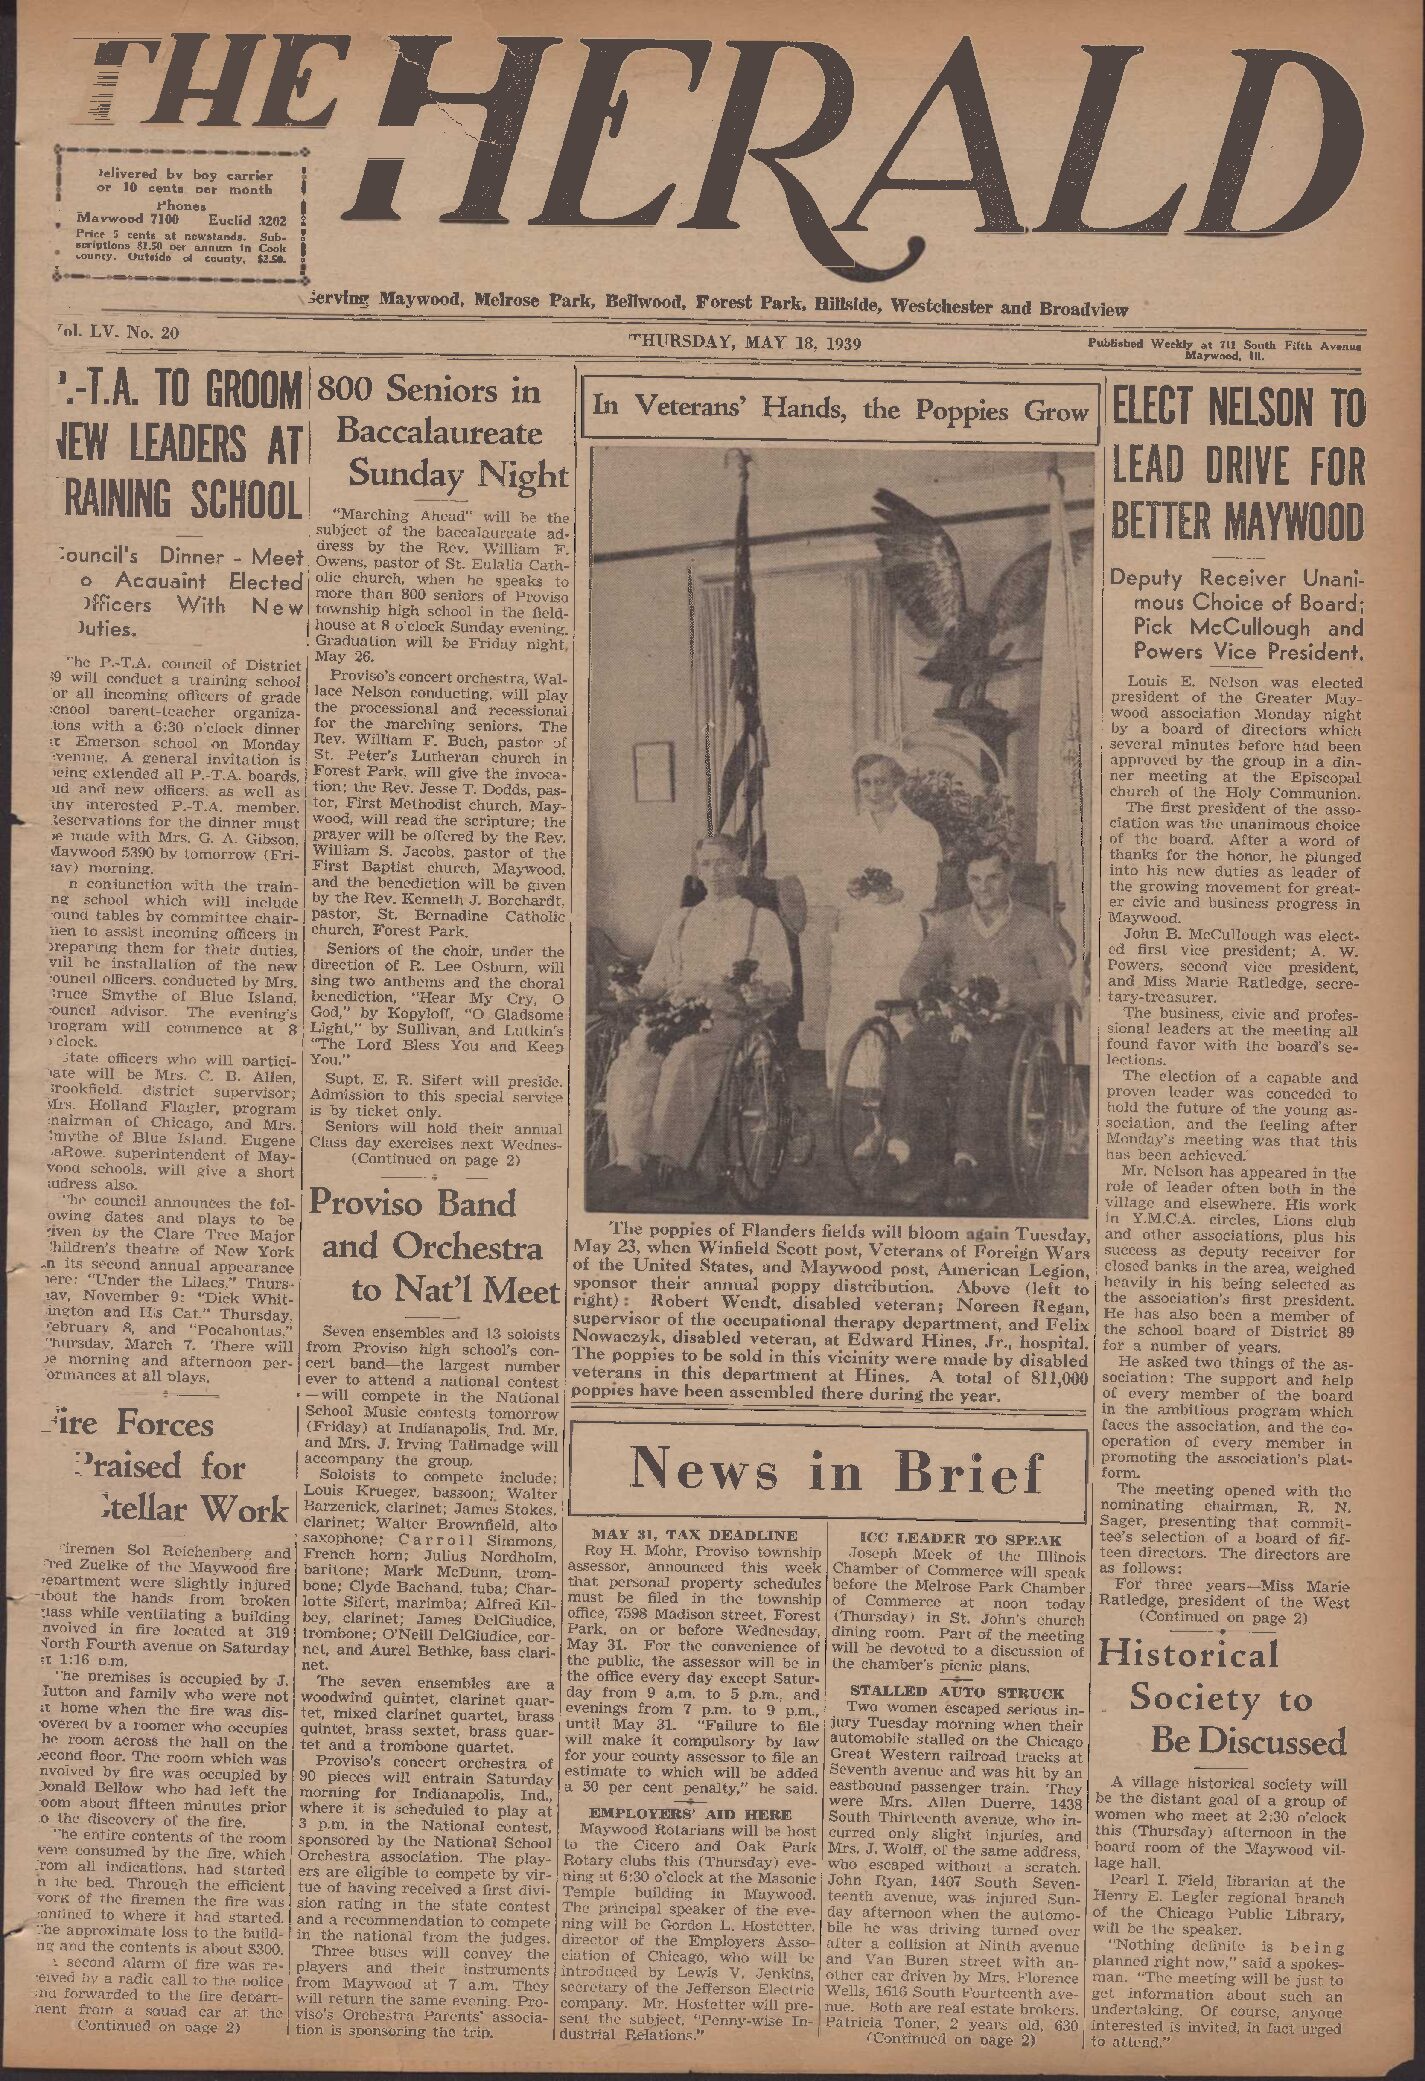 The Herald – 19390518